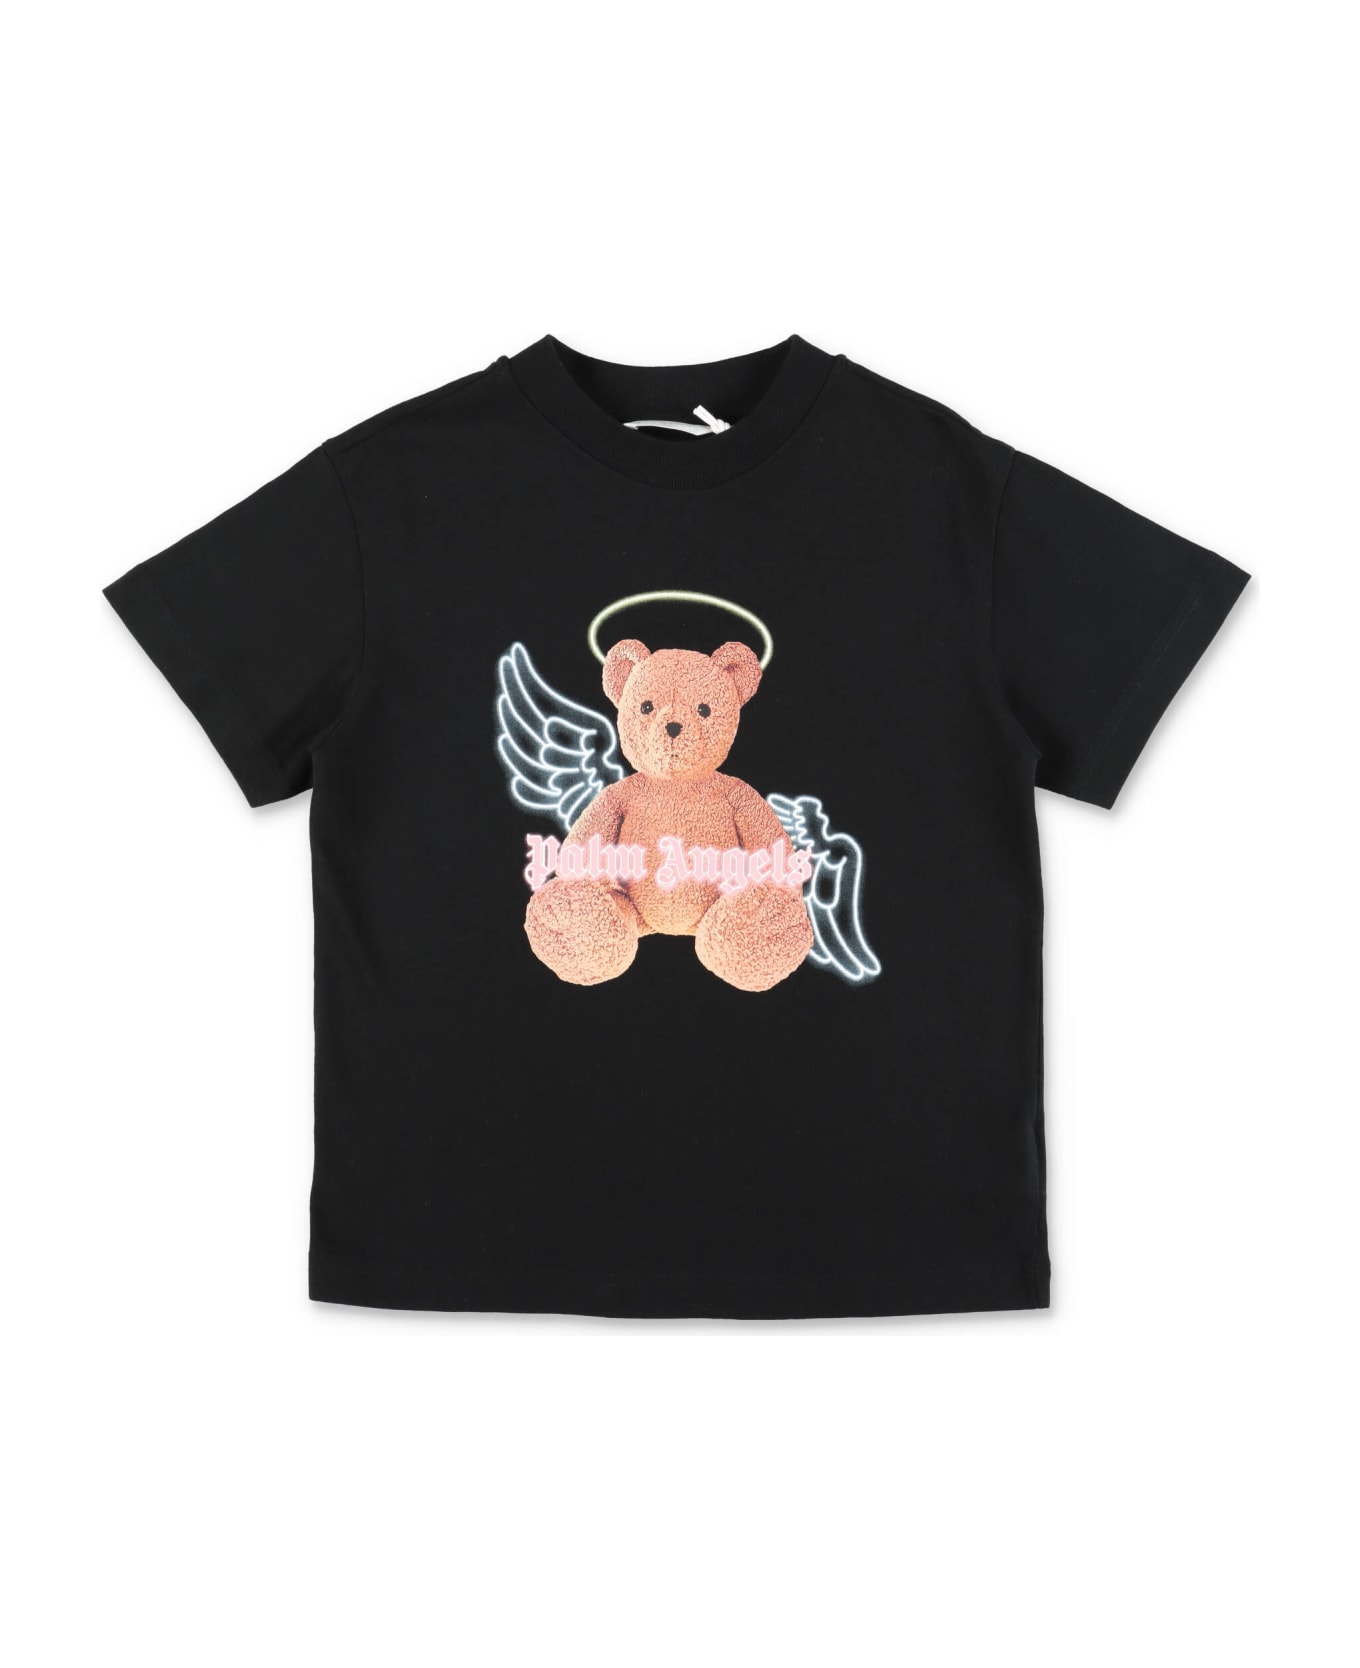 Palm Angels T-shirt Nera In Jersey Di Cotone Bambina - Nero